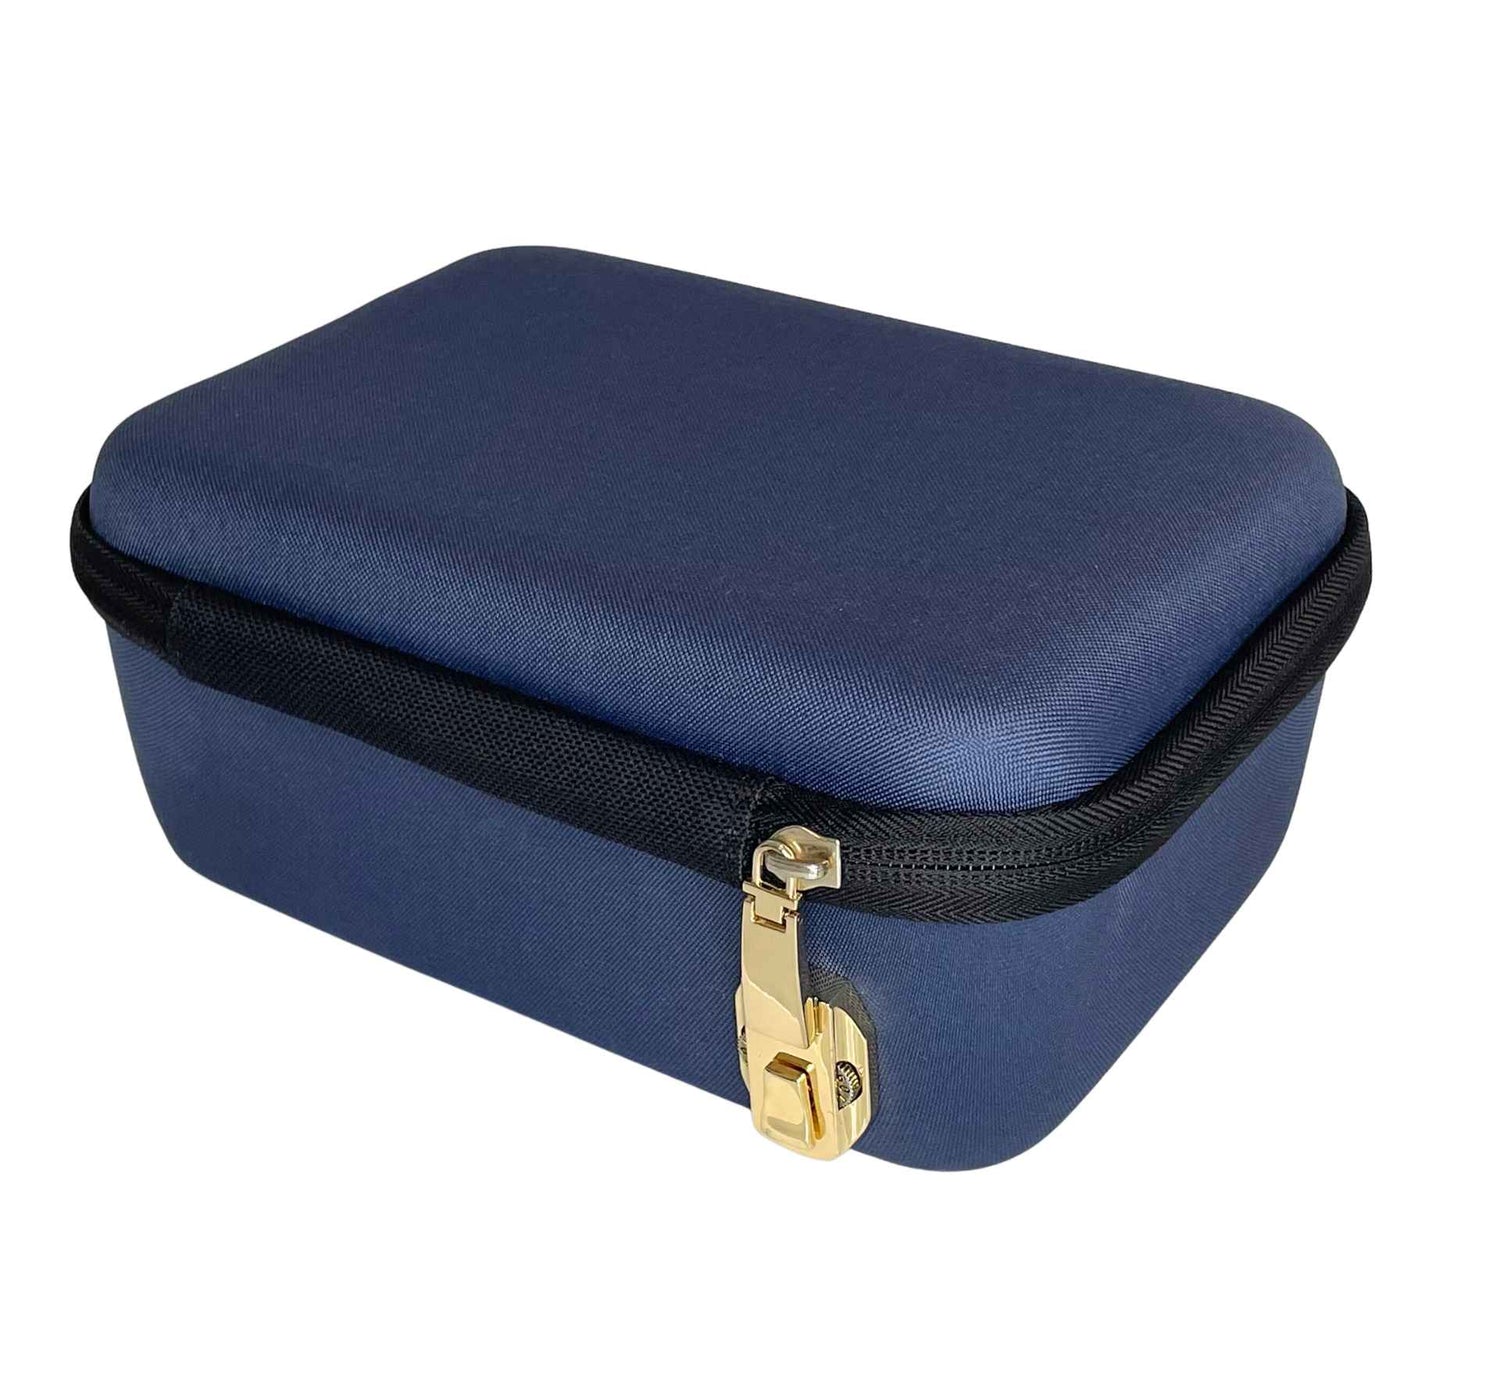 Moxie stash box with zipper code lock